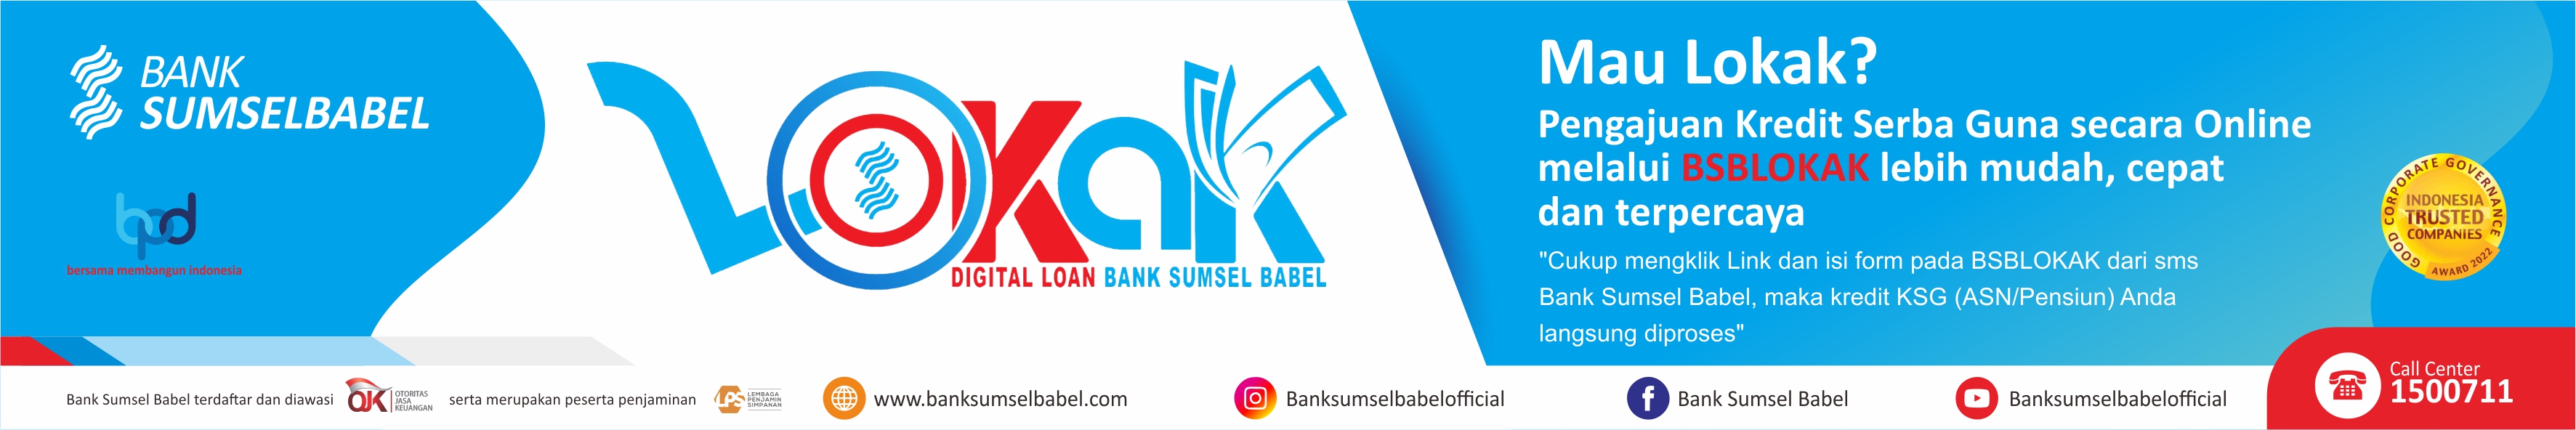 Bank Sumsel Babel meningkatkan layanan perbankan melalui Agen BSB LUR